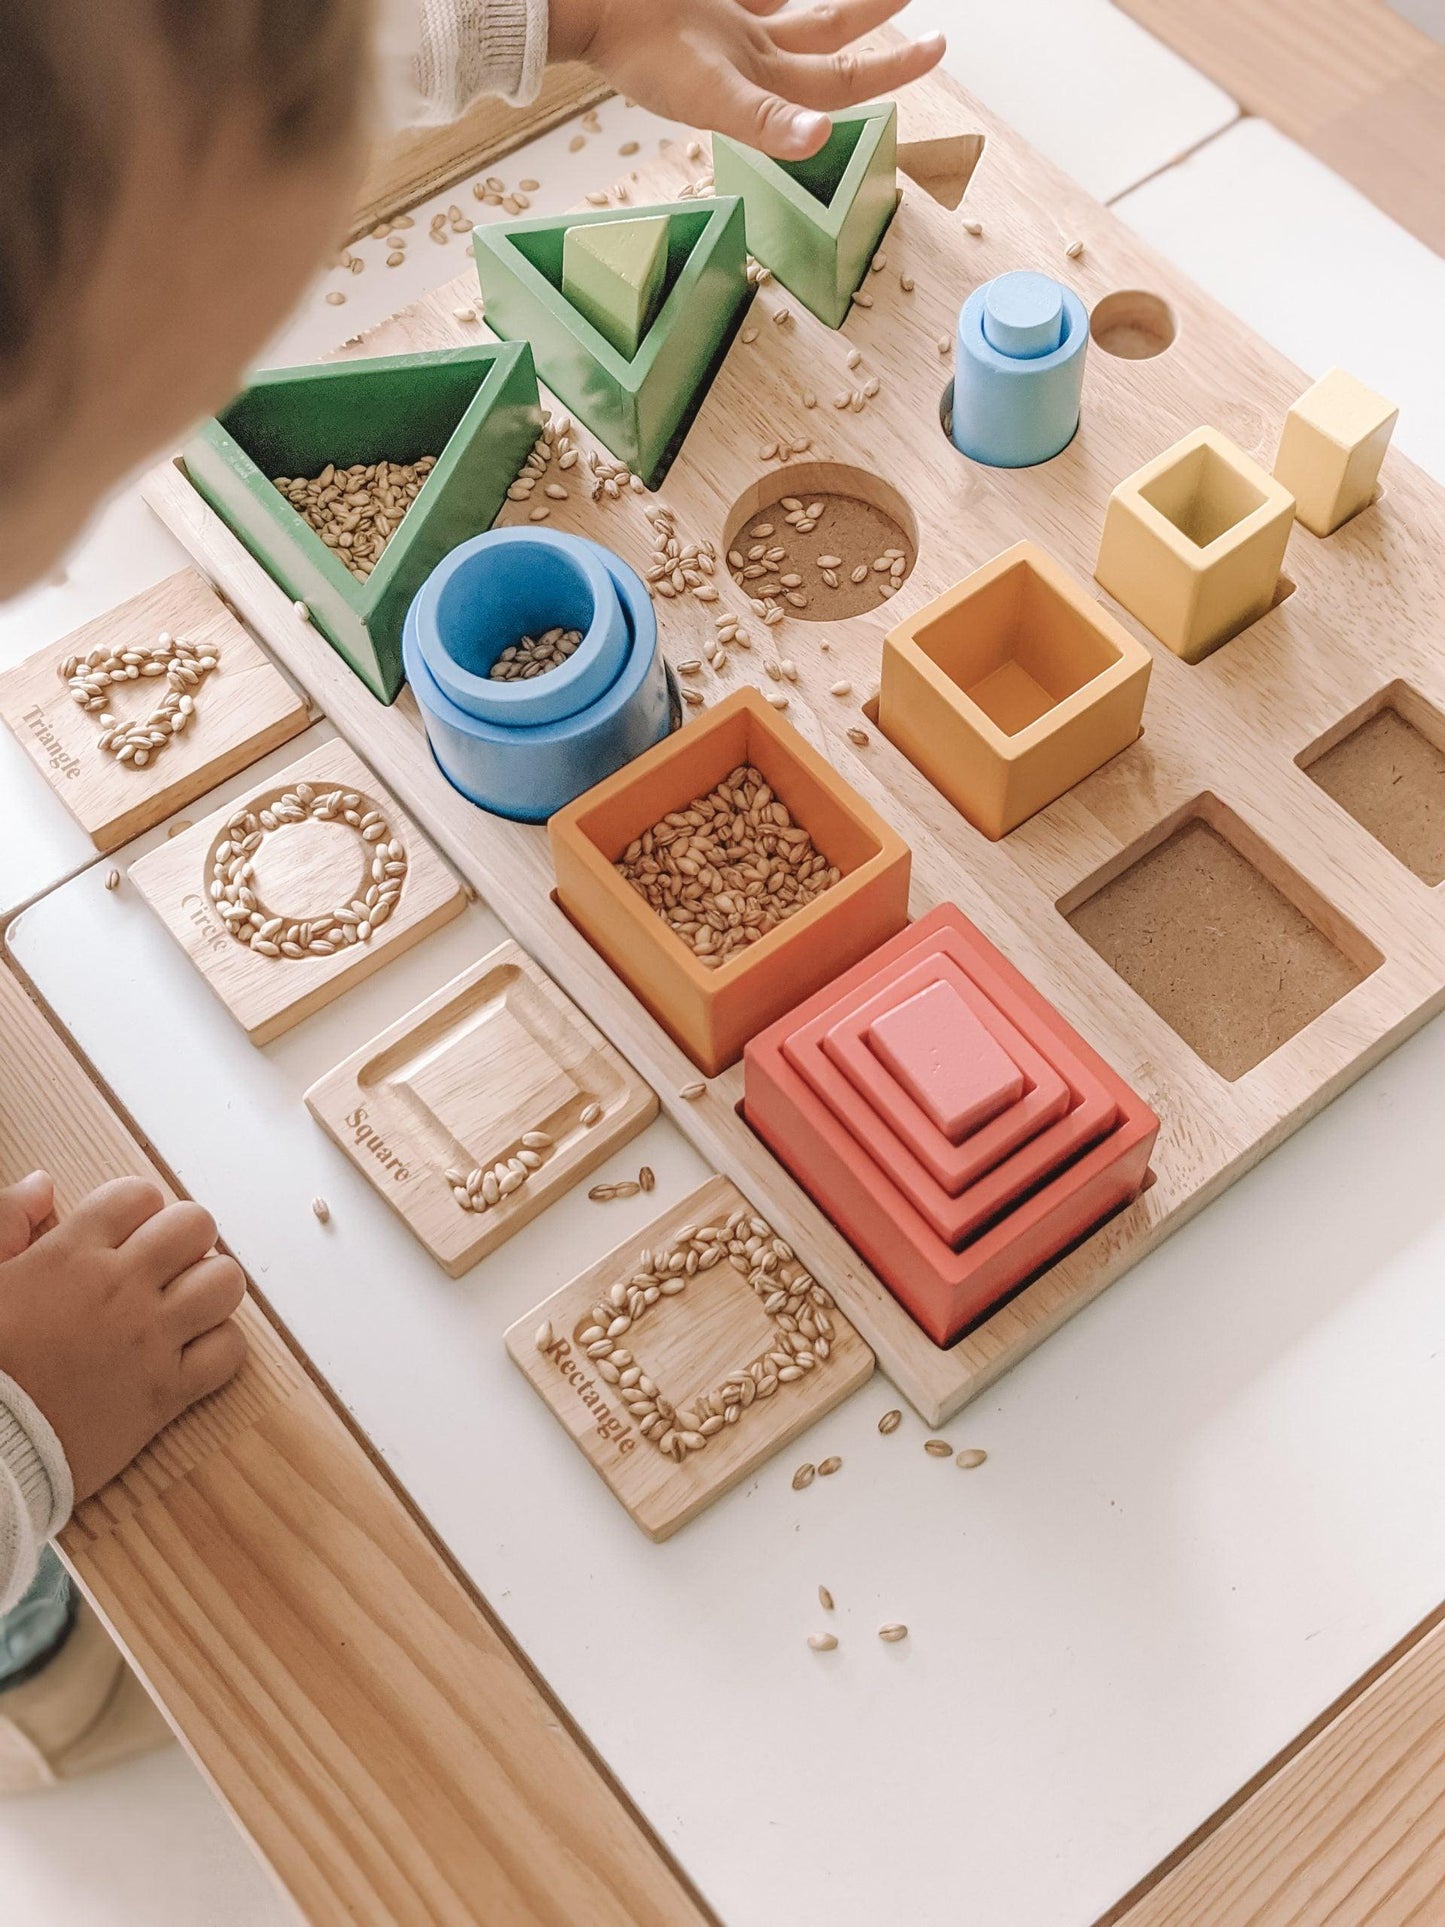 Qtoys Montessori-Inspired 3D Stacking & Sorting Playset